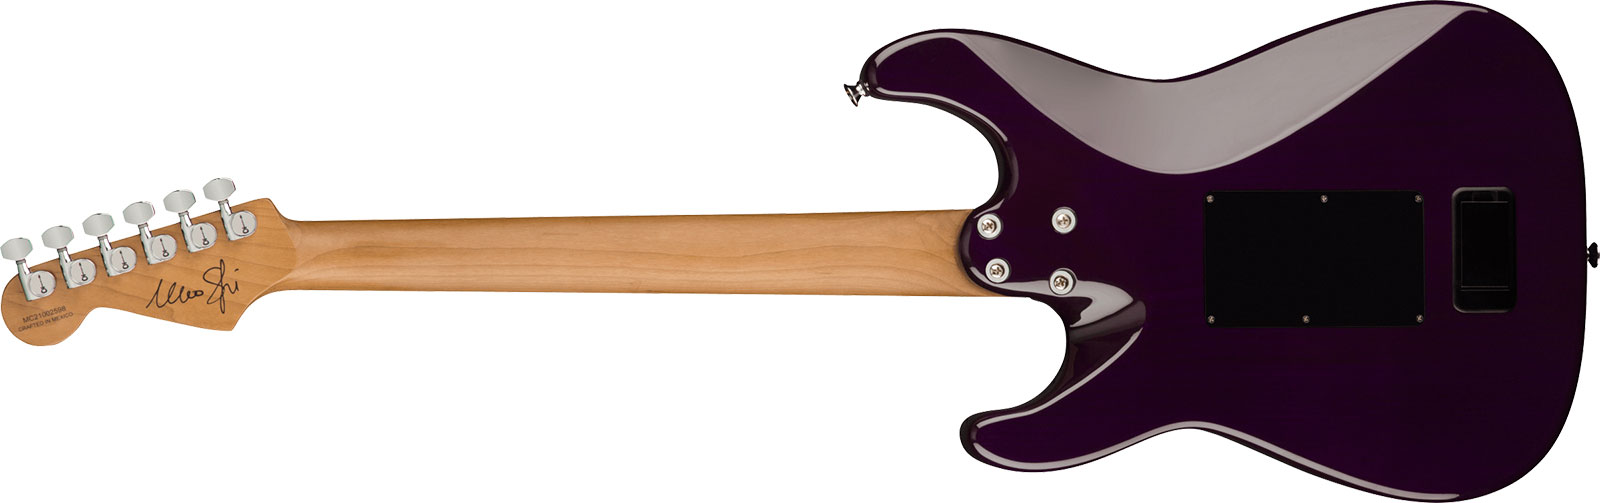 Charvel Marco Sfogli So Cal Style 1 Pro Mod Signature Hss Emg Fr Mn - Transparent Purple Burst - Signature-E-Gitarre - Variation 1